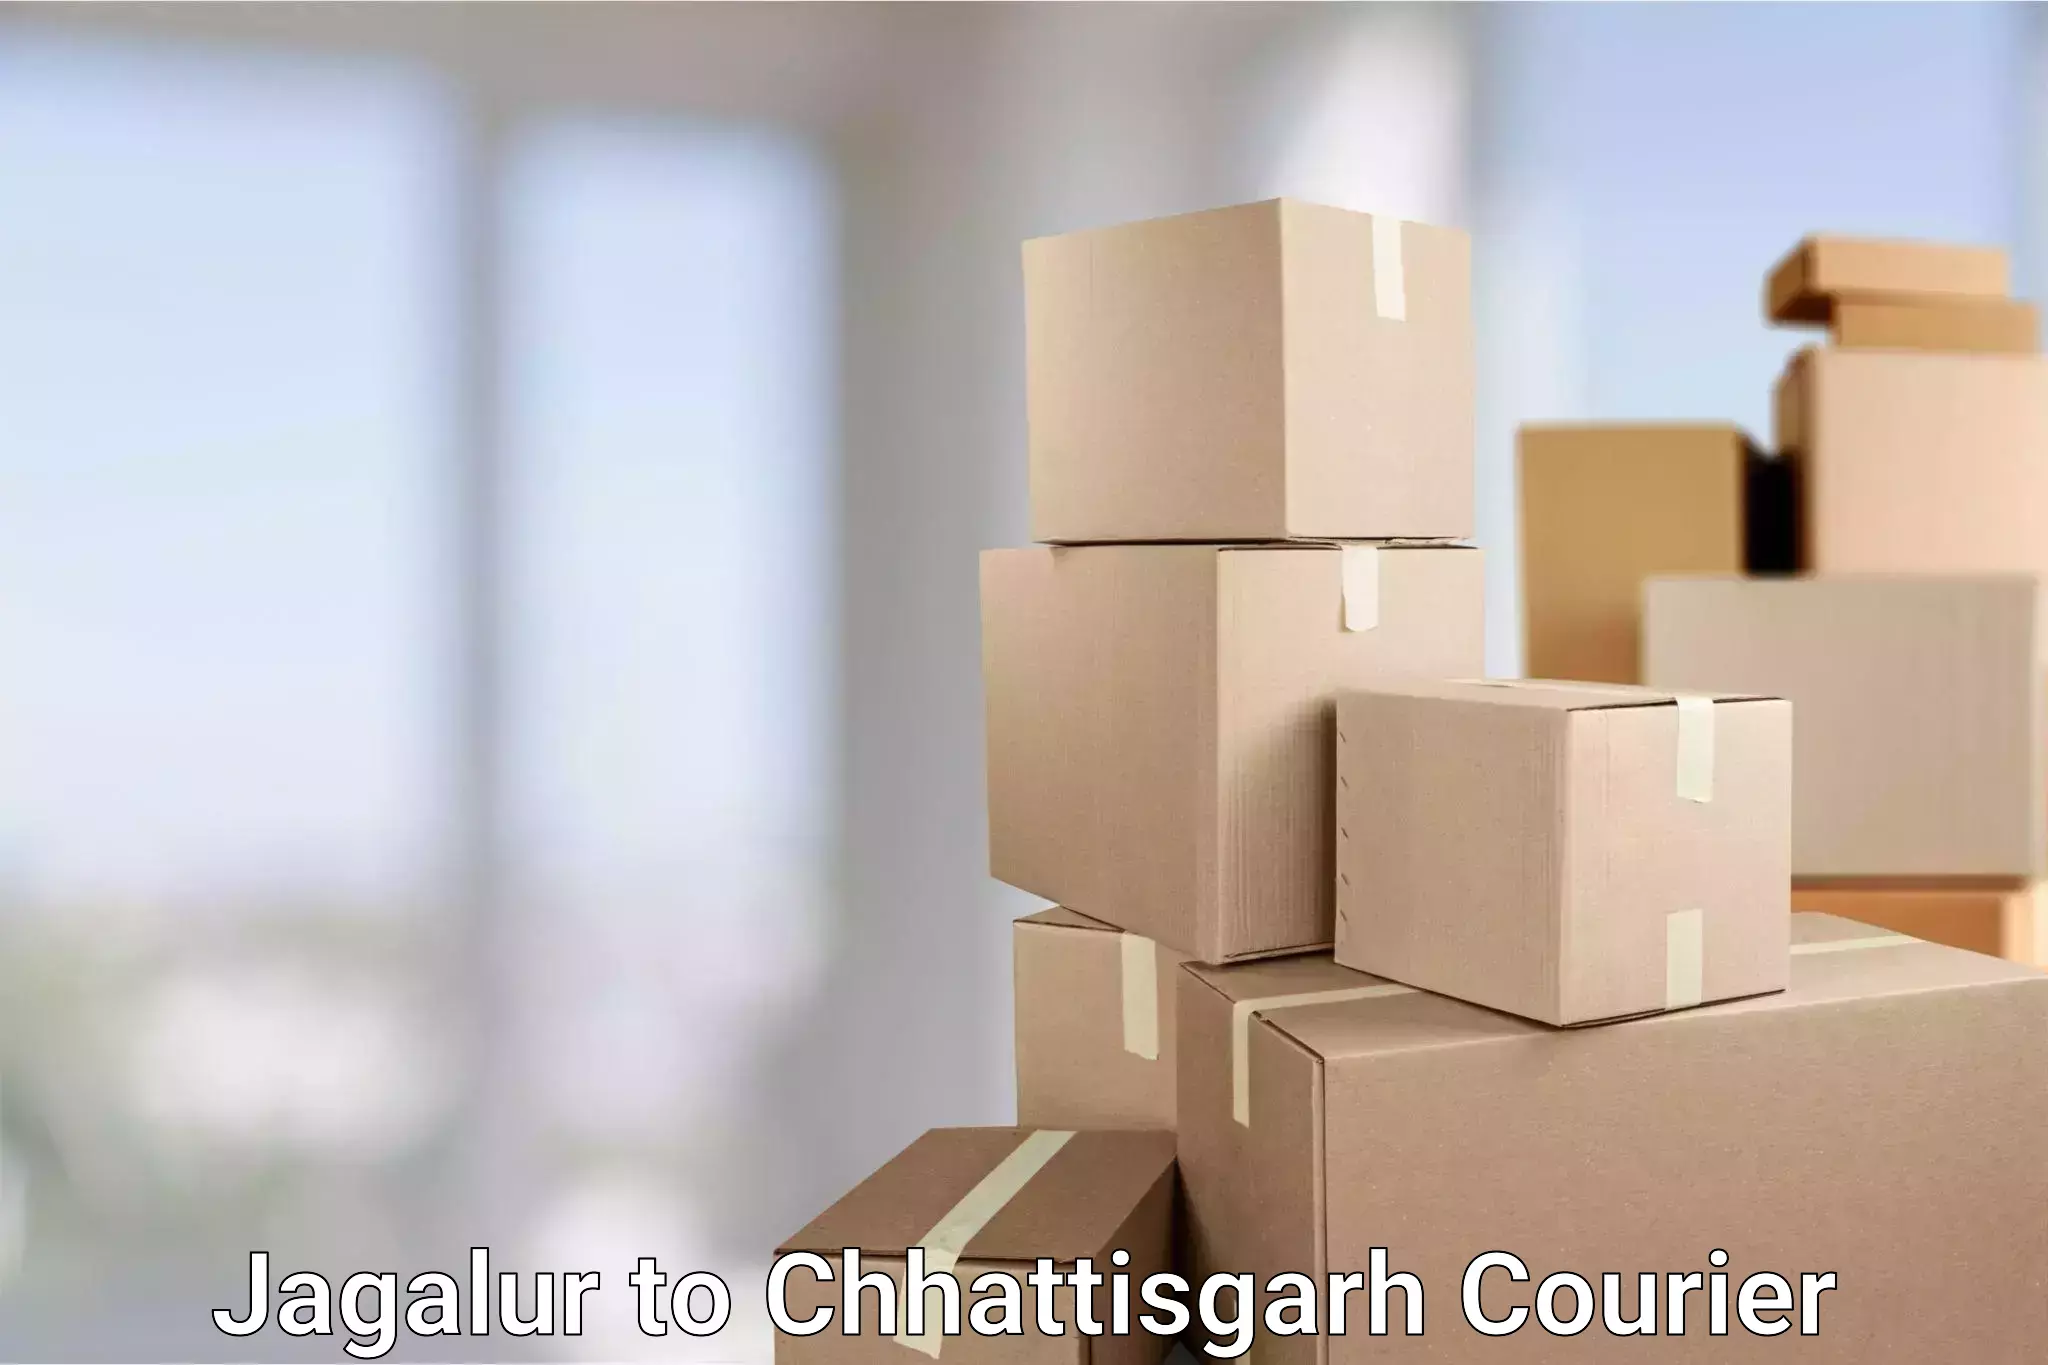 Efficient order fulfillment Jagalur to Chhattisgarh